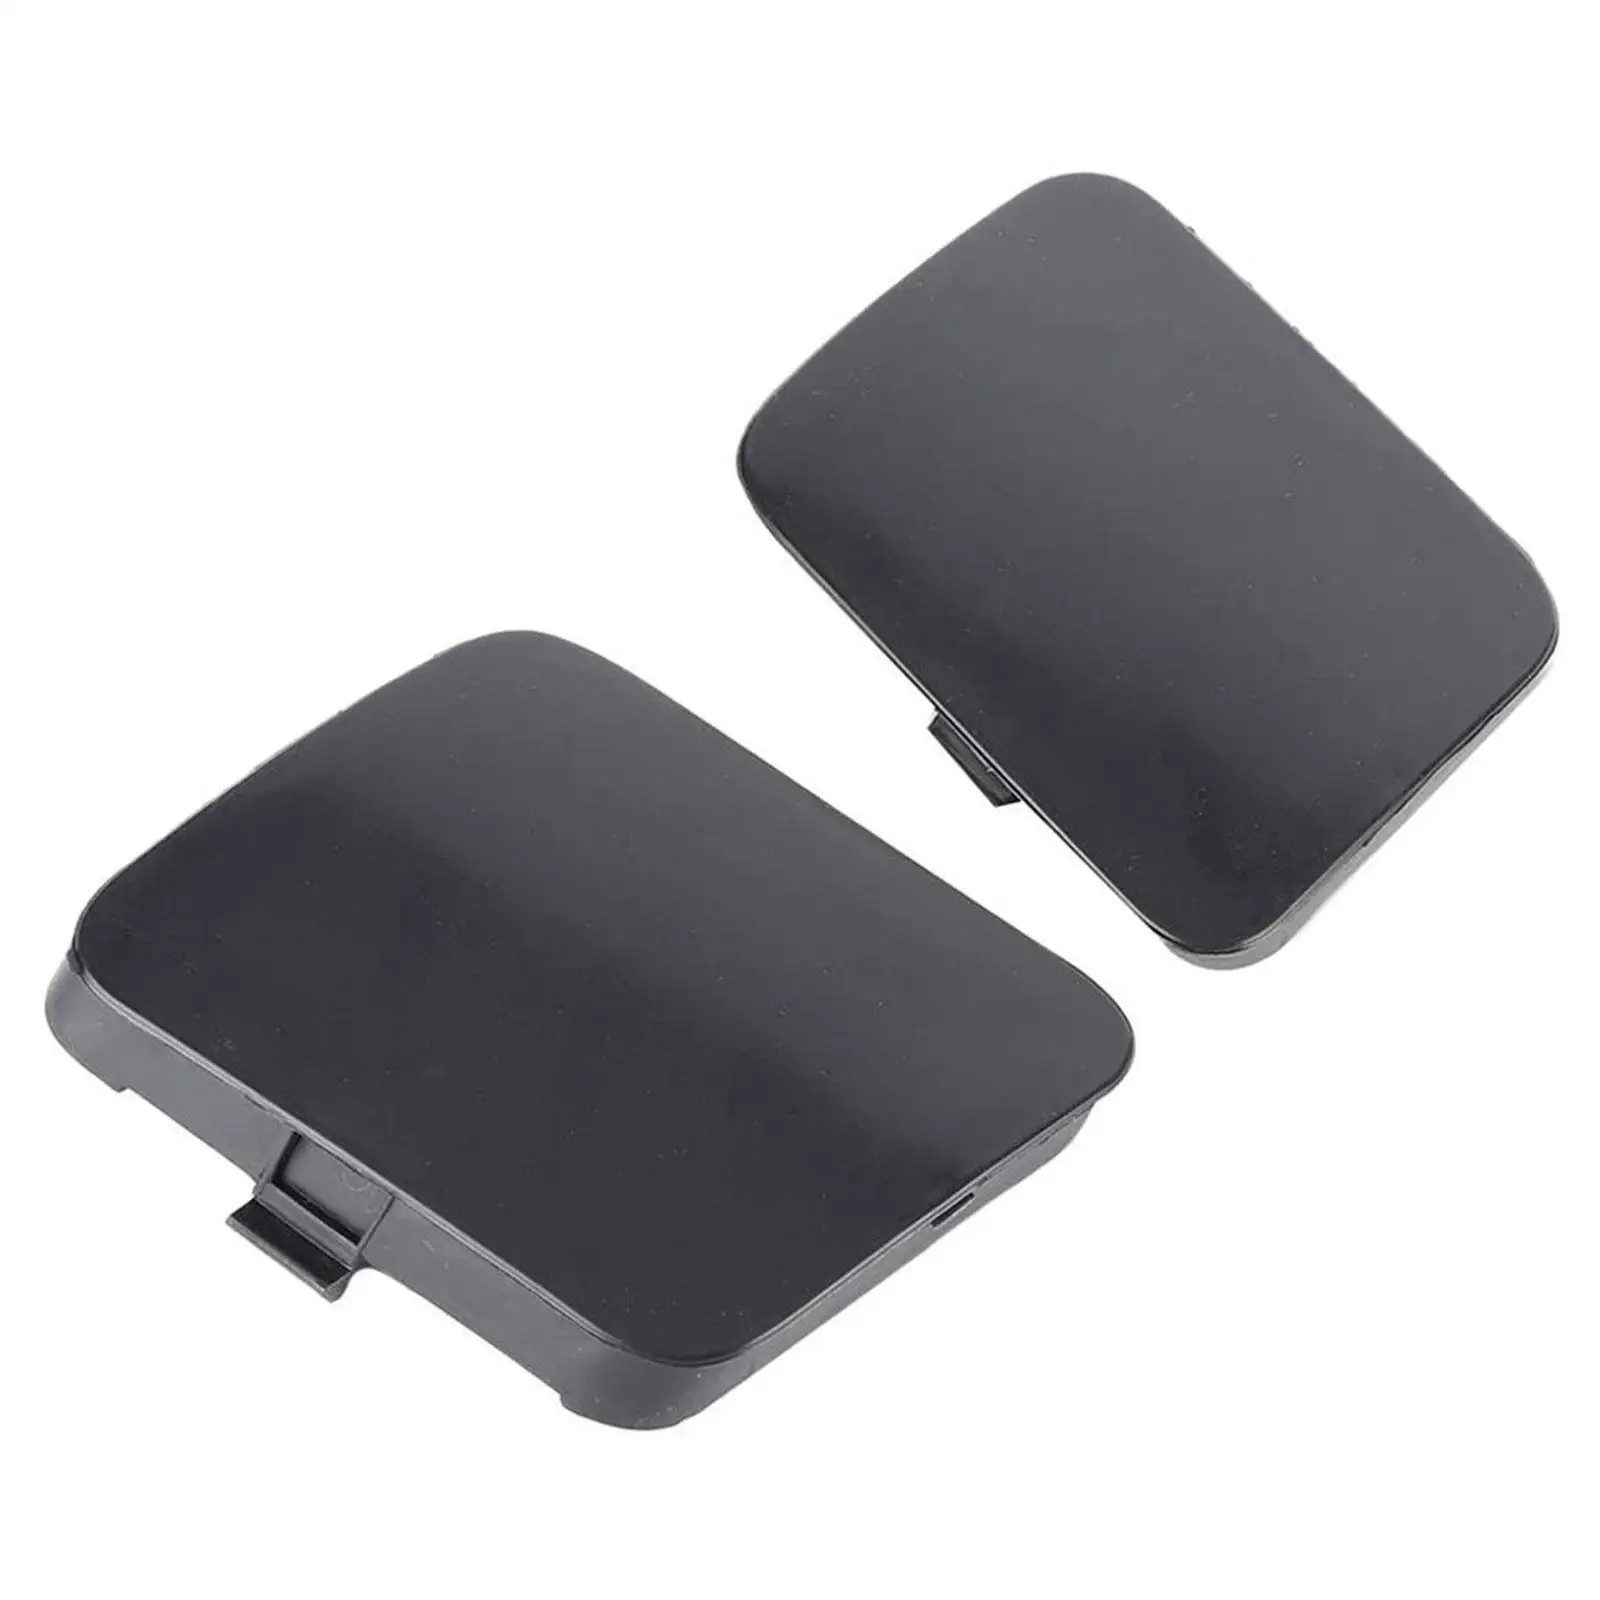 2x Bumper Tow Hook Bracket Cover Cap Durable Accessory Replaces Parts Portable